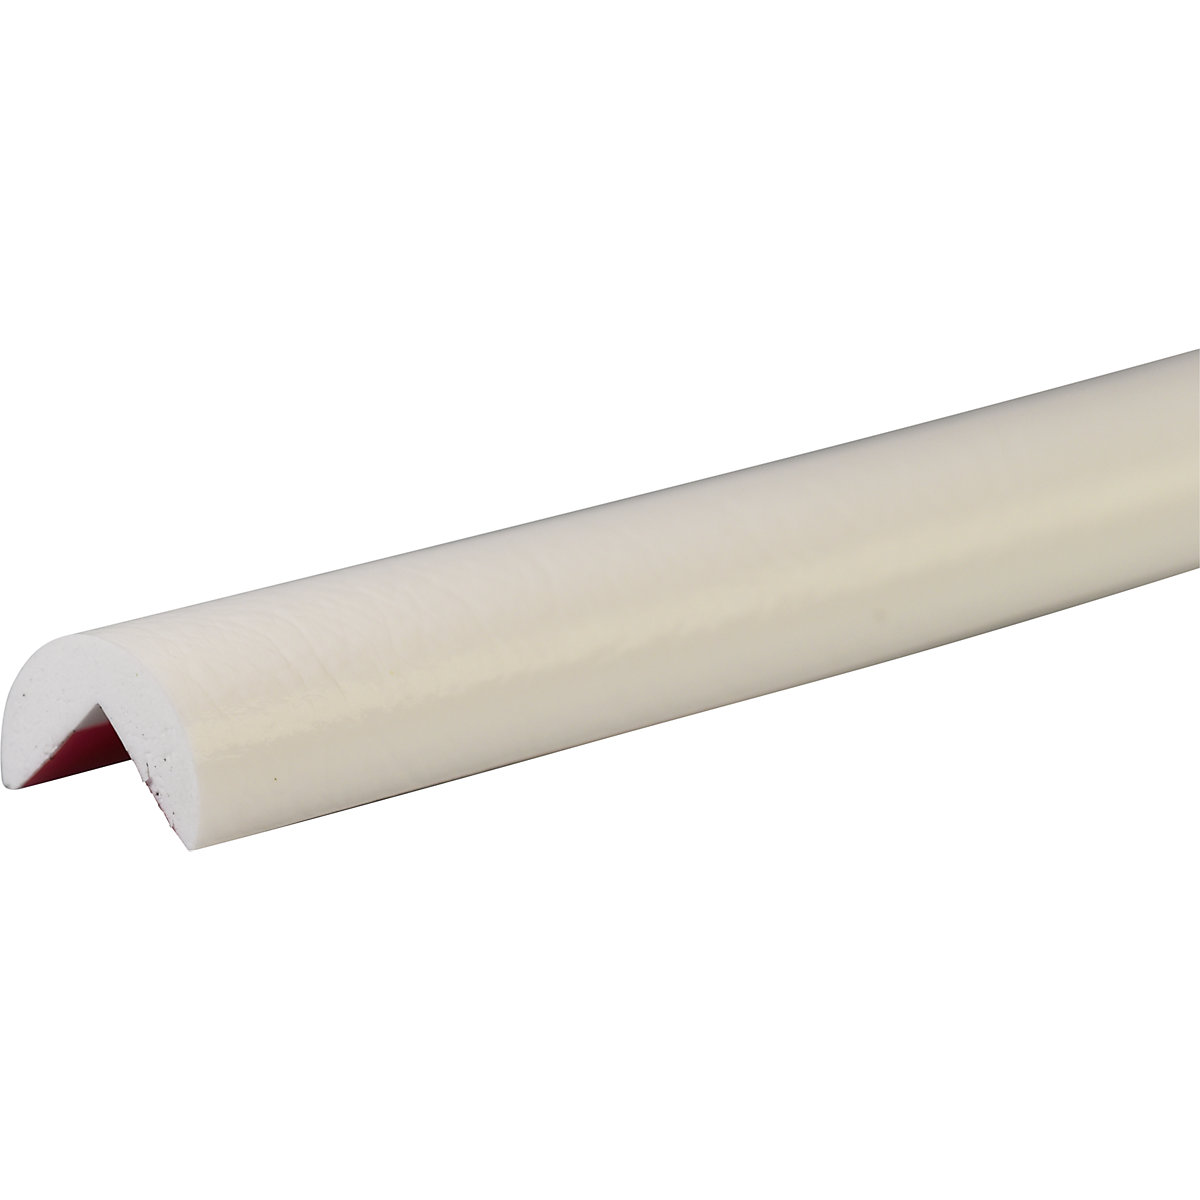 Knuffi®-hoekbescherming – SHG, type A, herbruikbaar, stuk van 1 m, wit-10